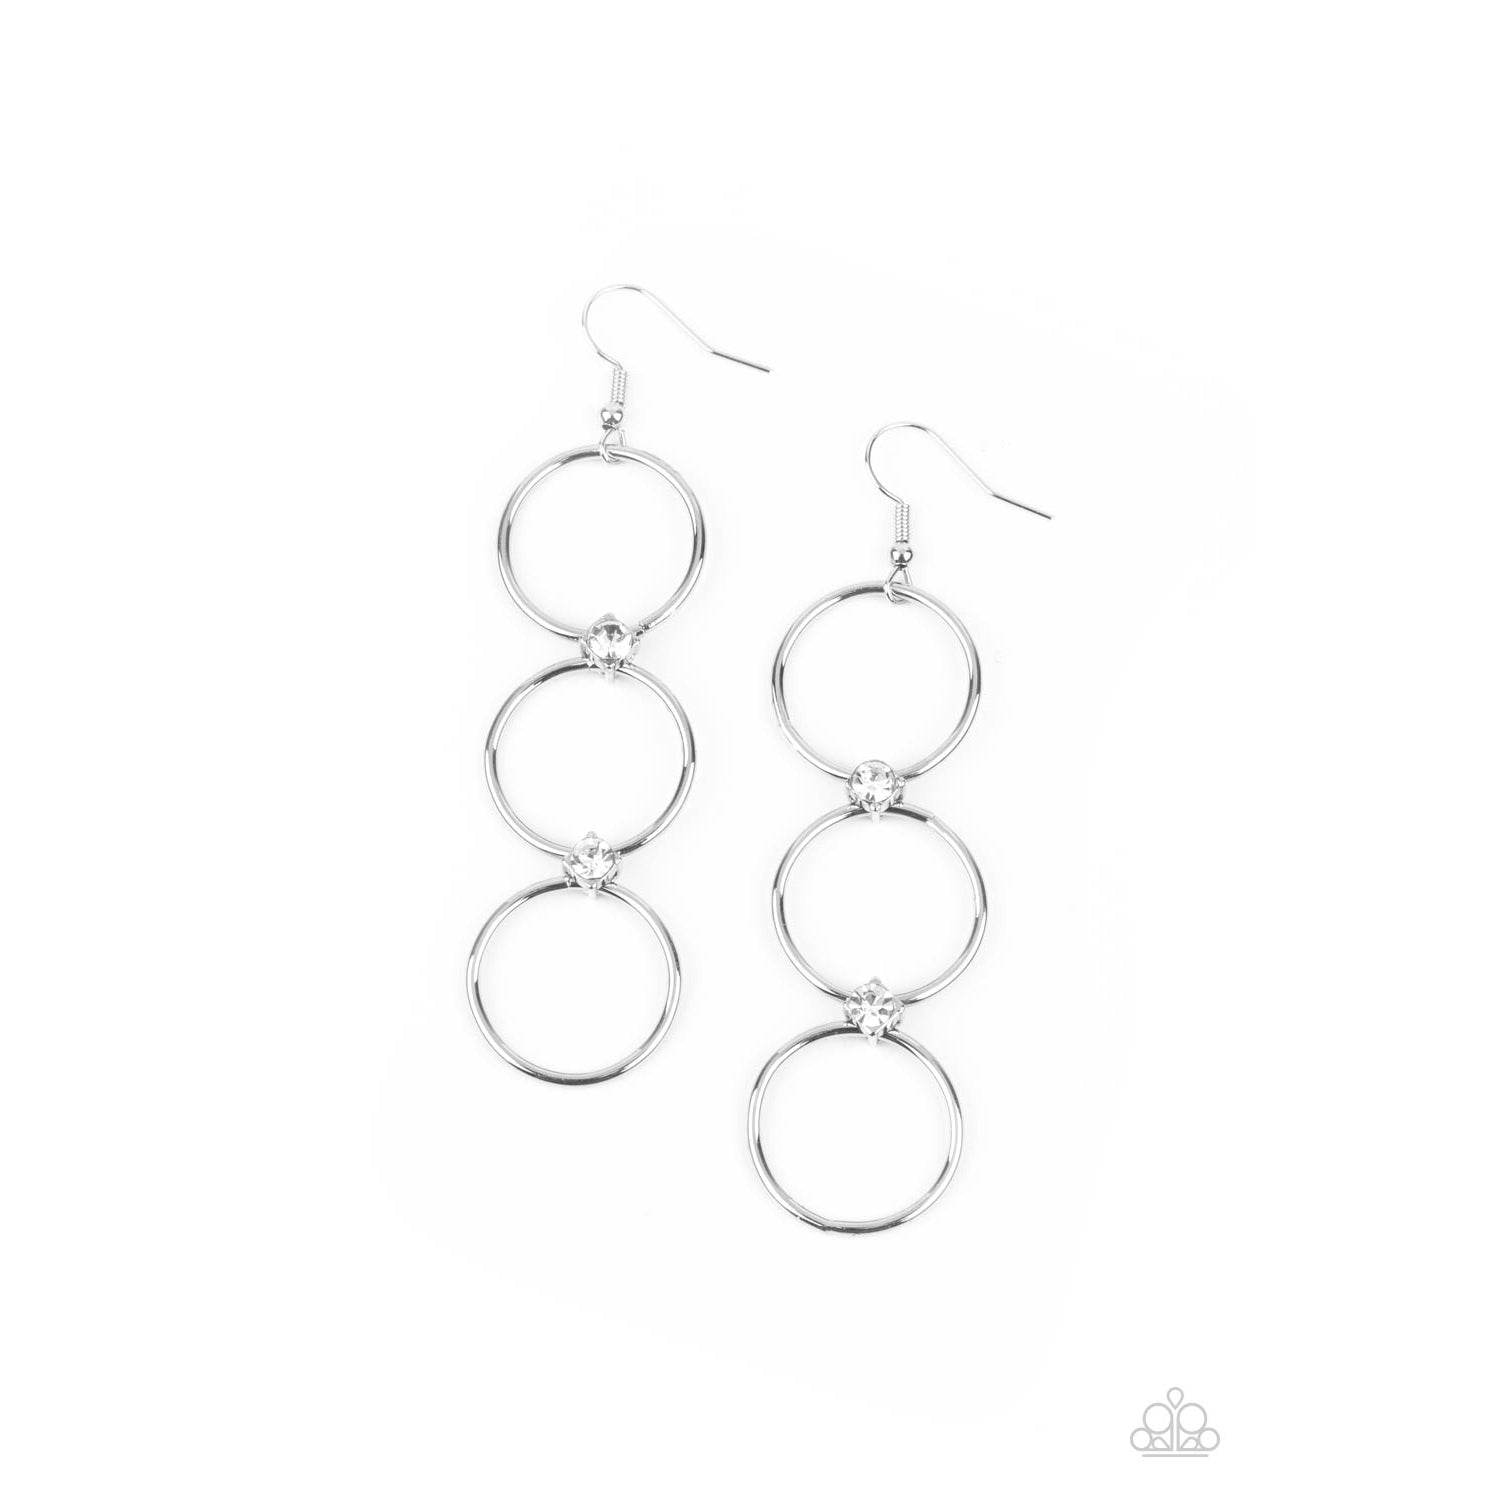 Refined Society - White Rhinestone Earrings - Paparazzi Accessories - GlaMarous Titi Jewels